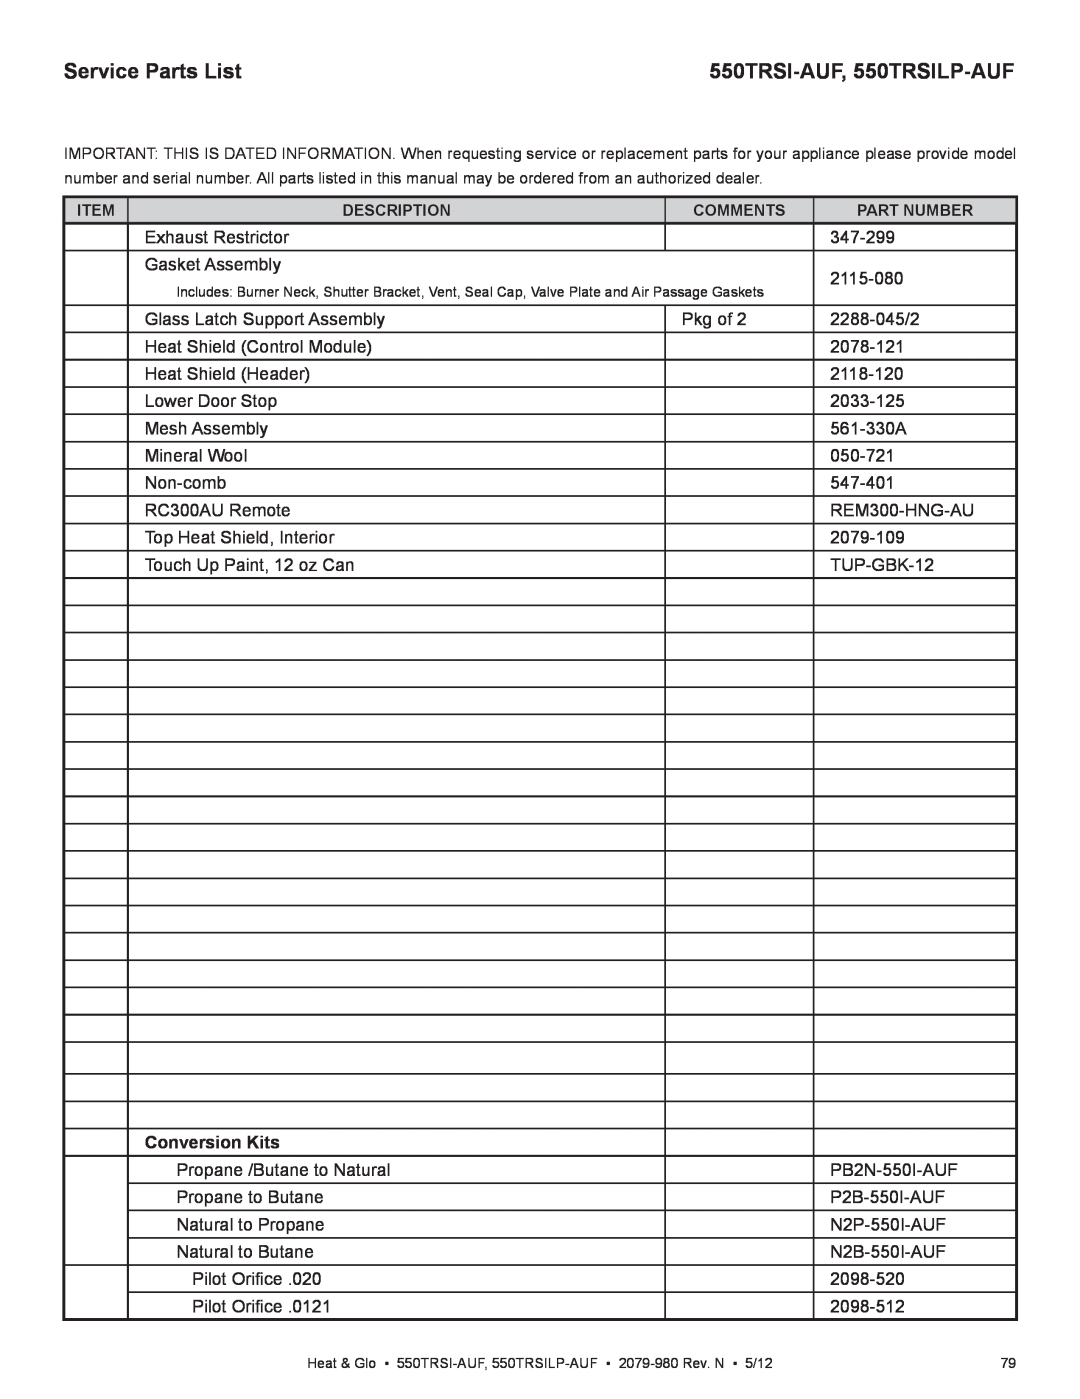 Heat & Glo LifeStyle owner manual Service Parts List, 550TRSI-AUF, 550TRSILP-AUF, Conversion Kits 